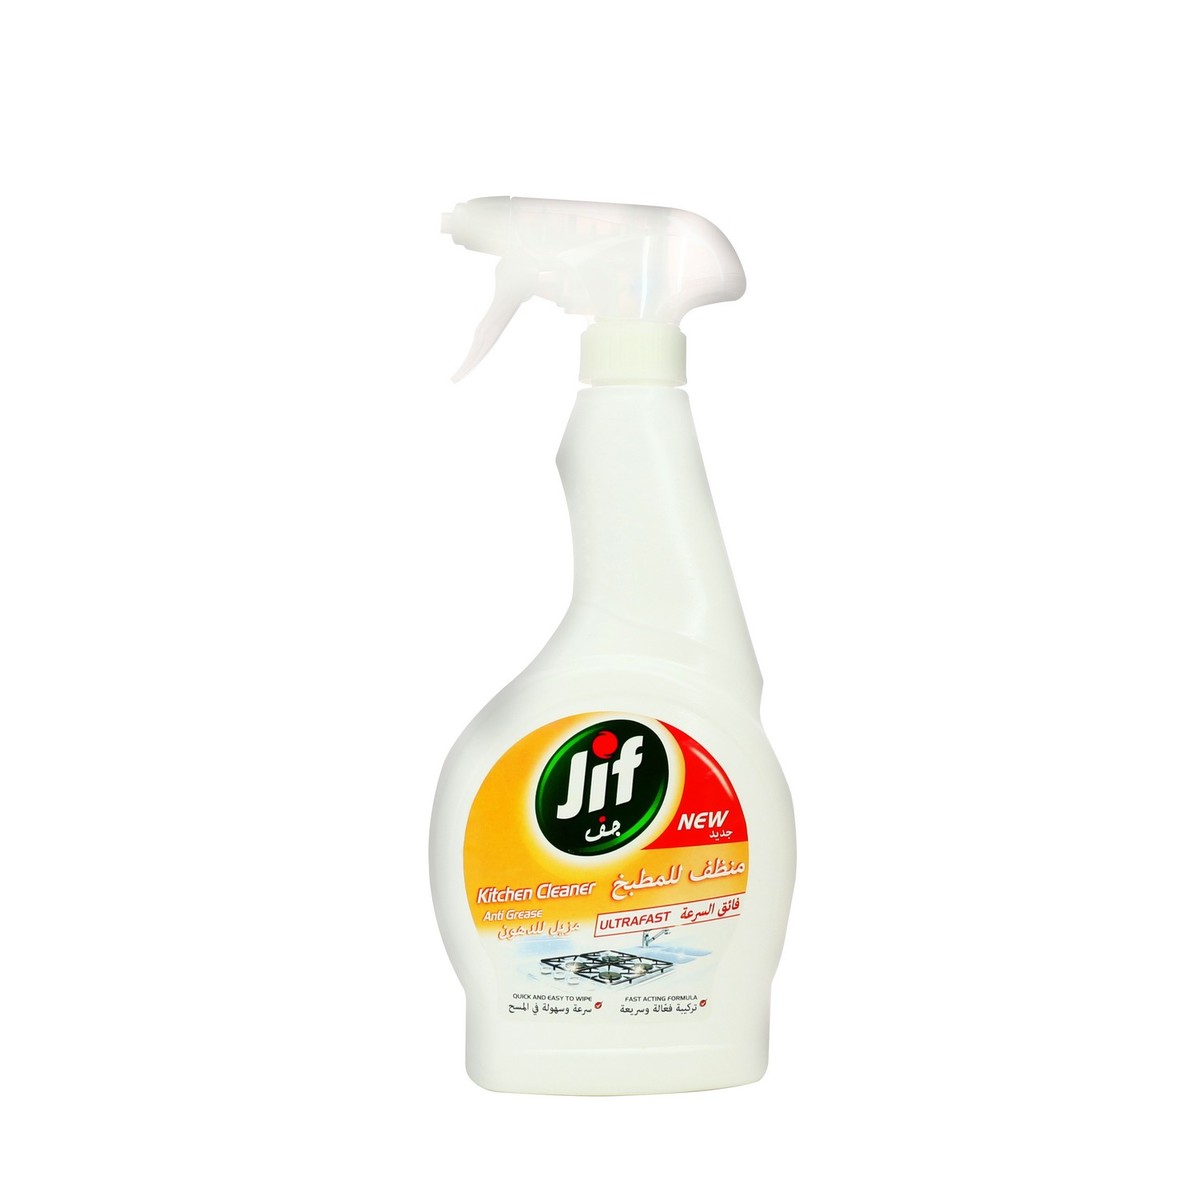 Jif Ultrafast Kitchen Spray 500ml